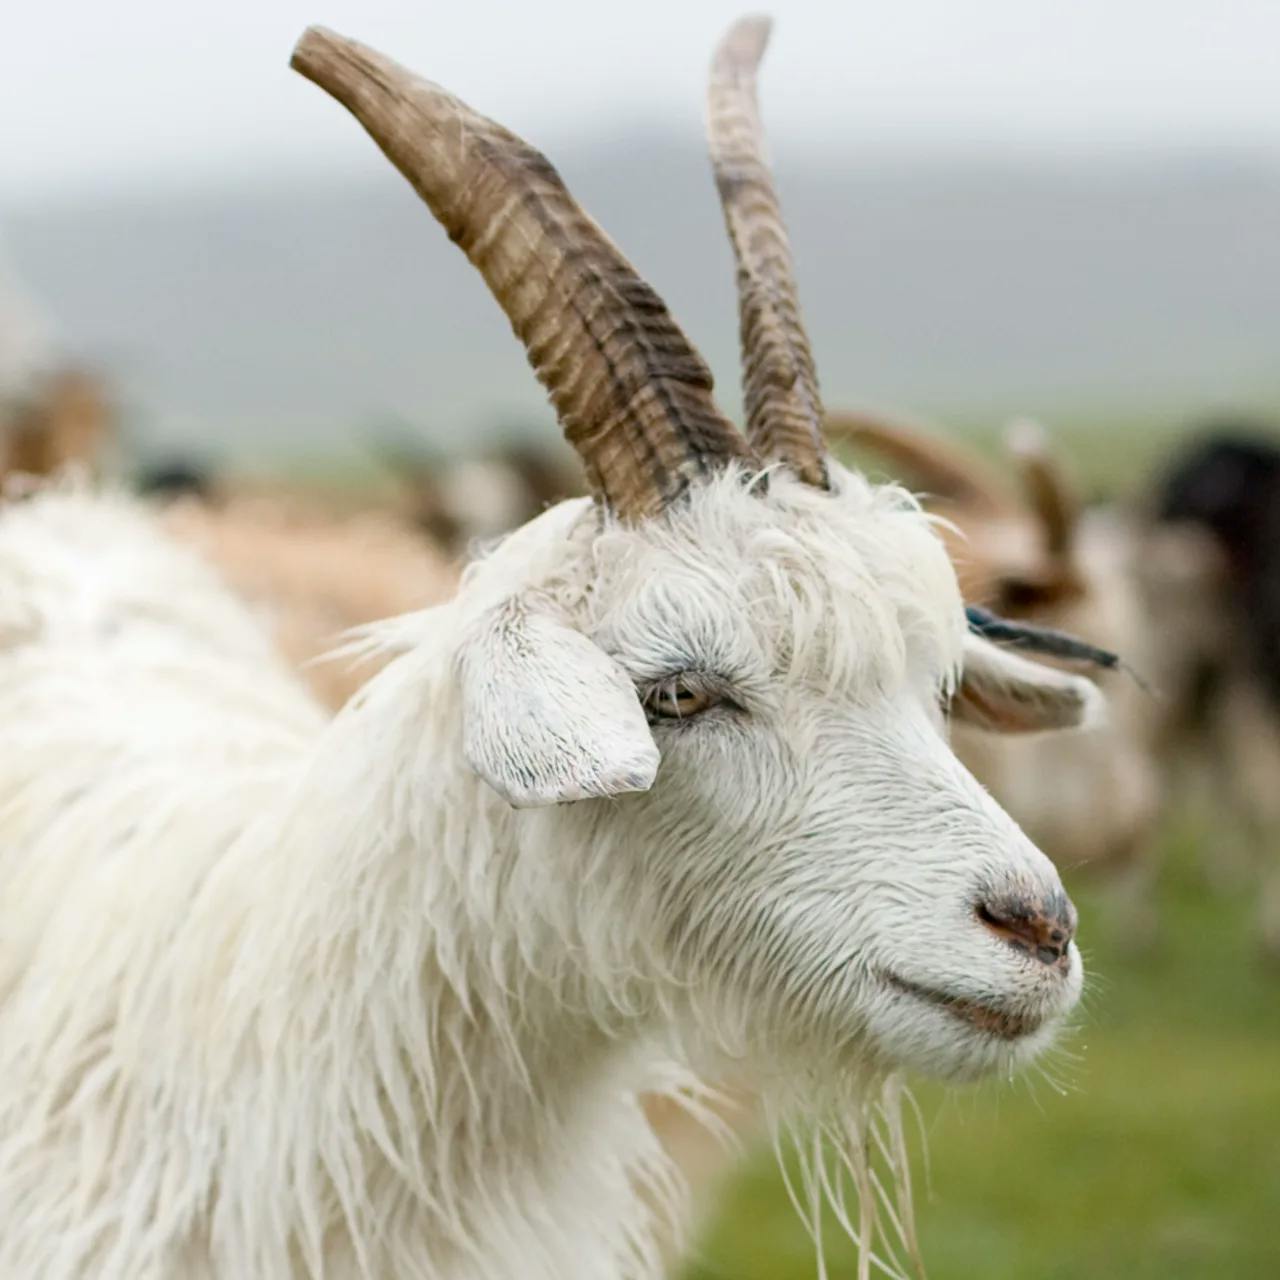 tretford | Image of a Goat